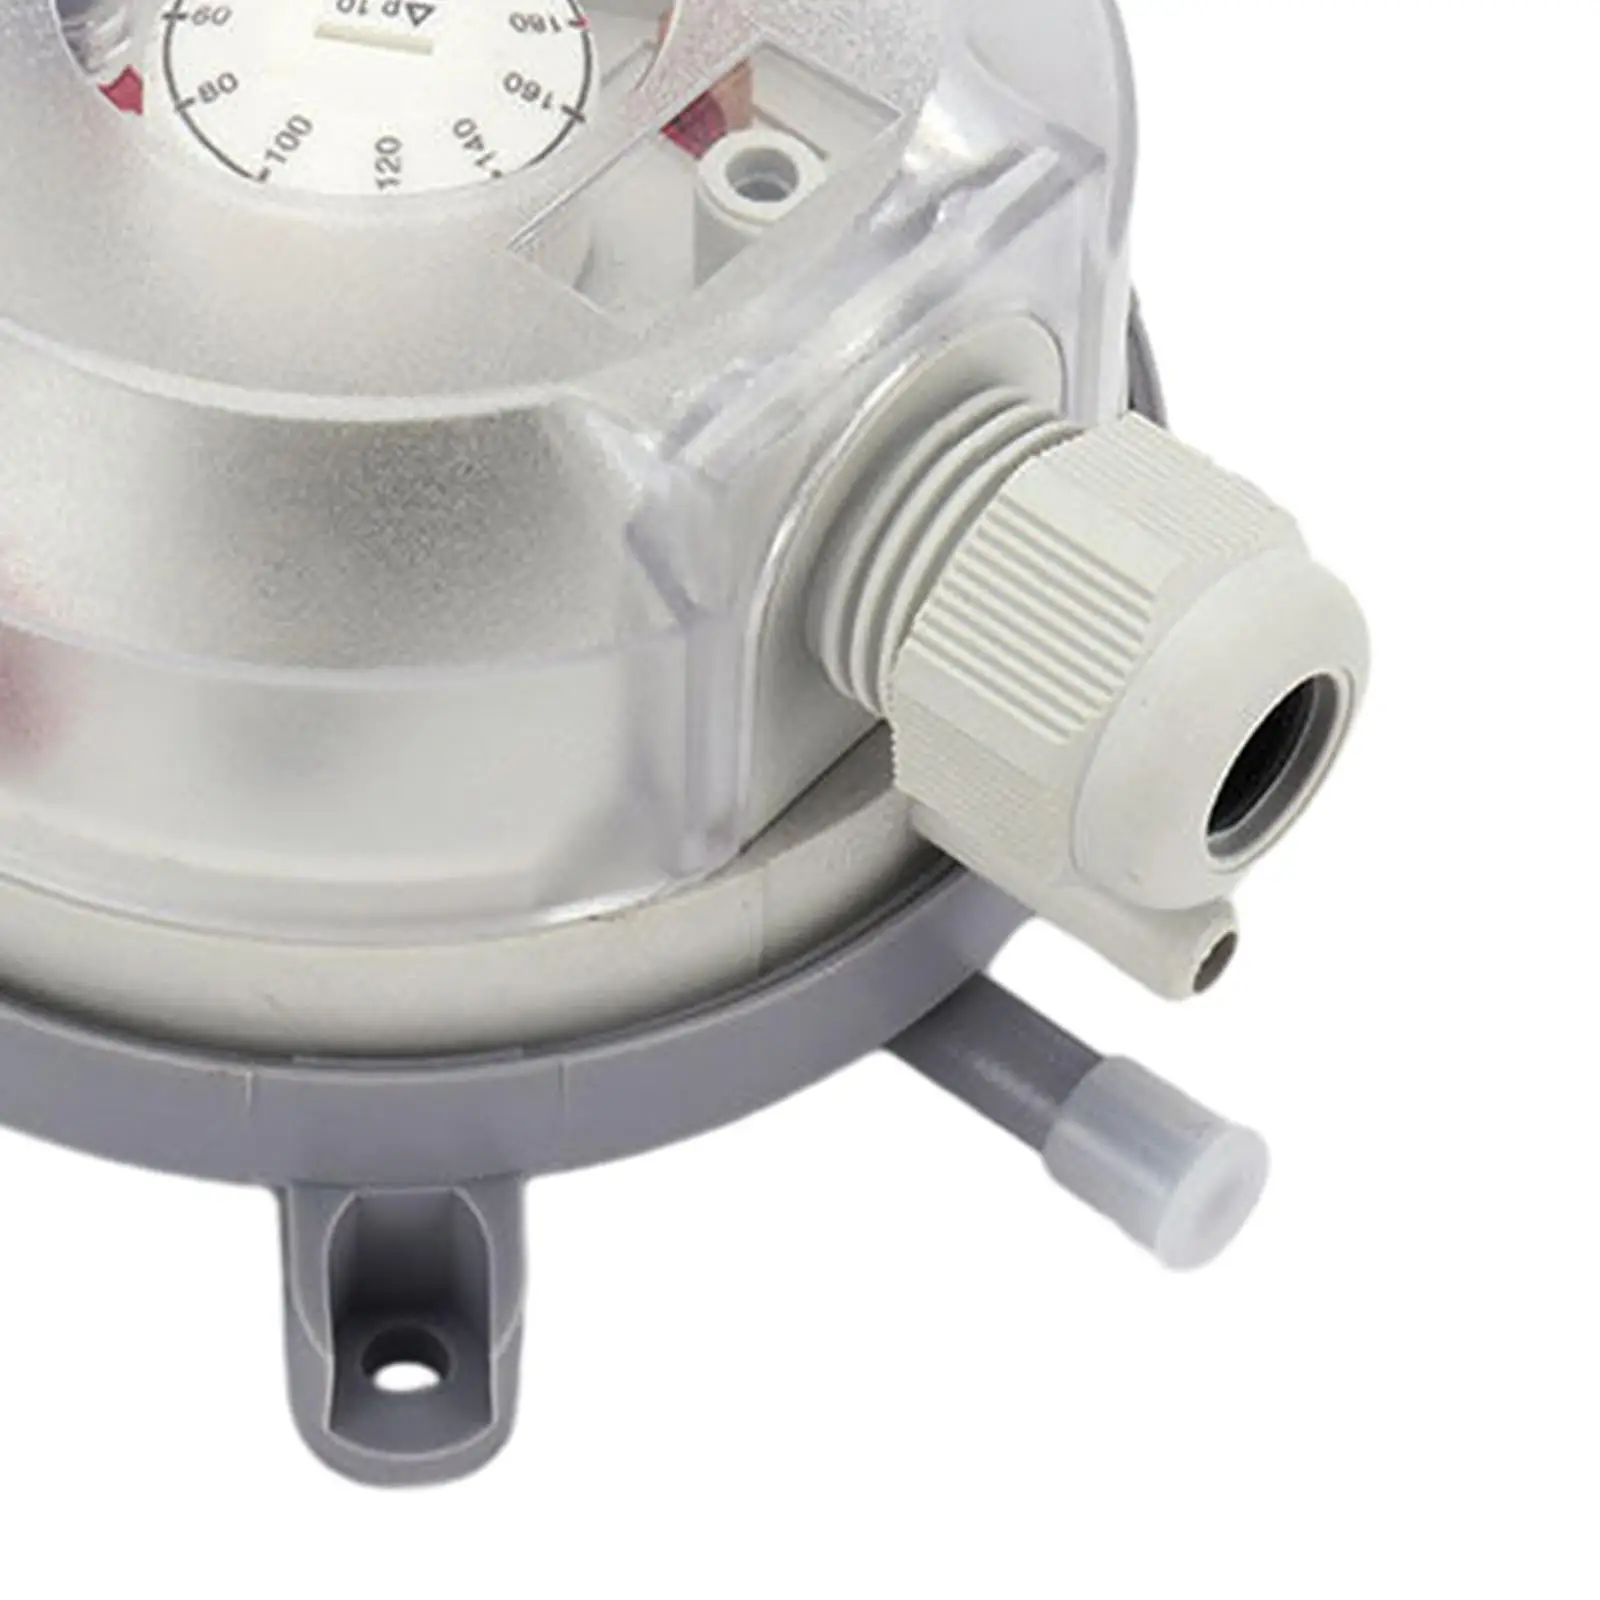 Differential Pressure Switch Good Conductivity Aerospace Air Pressure Sensor